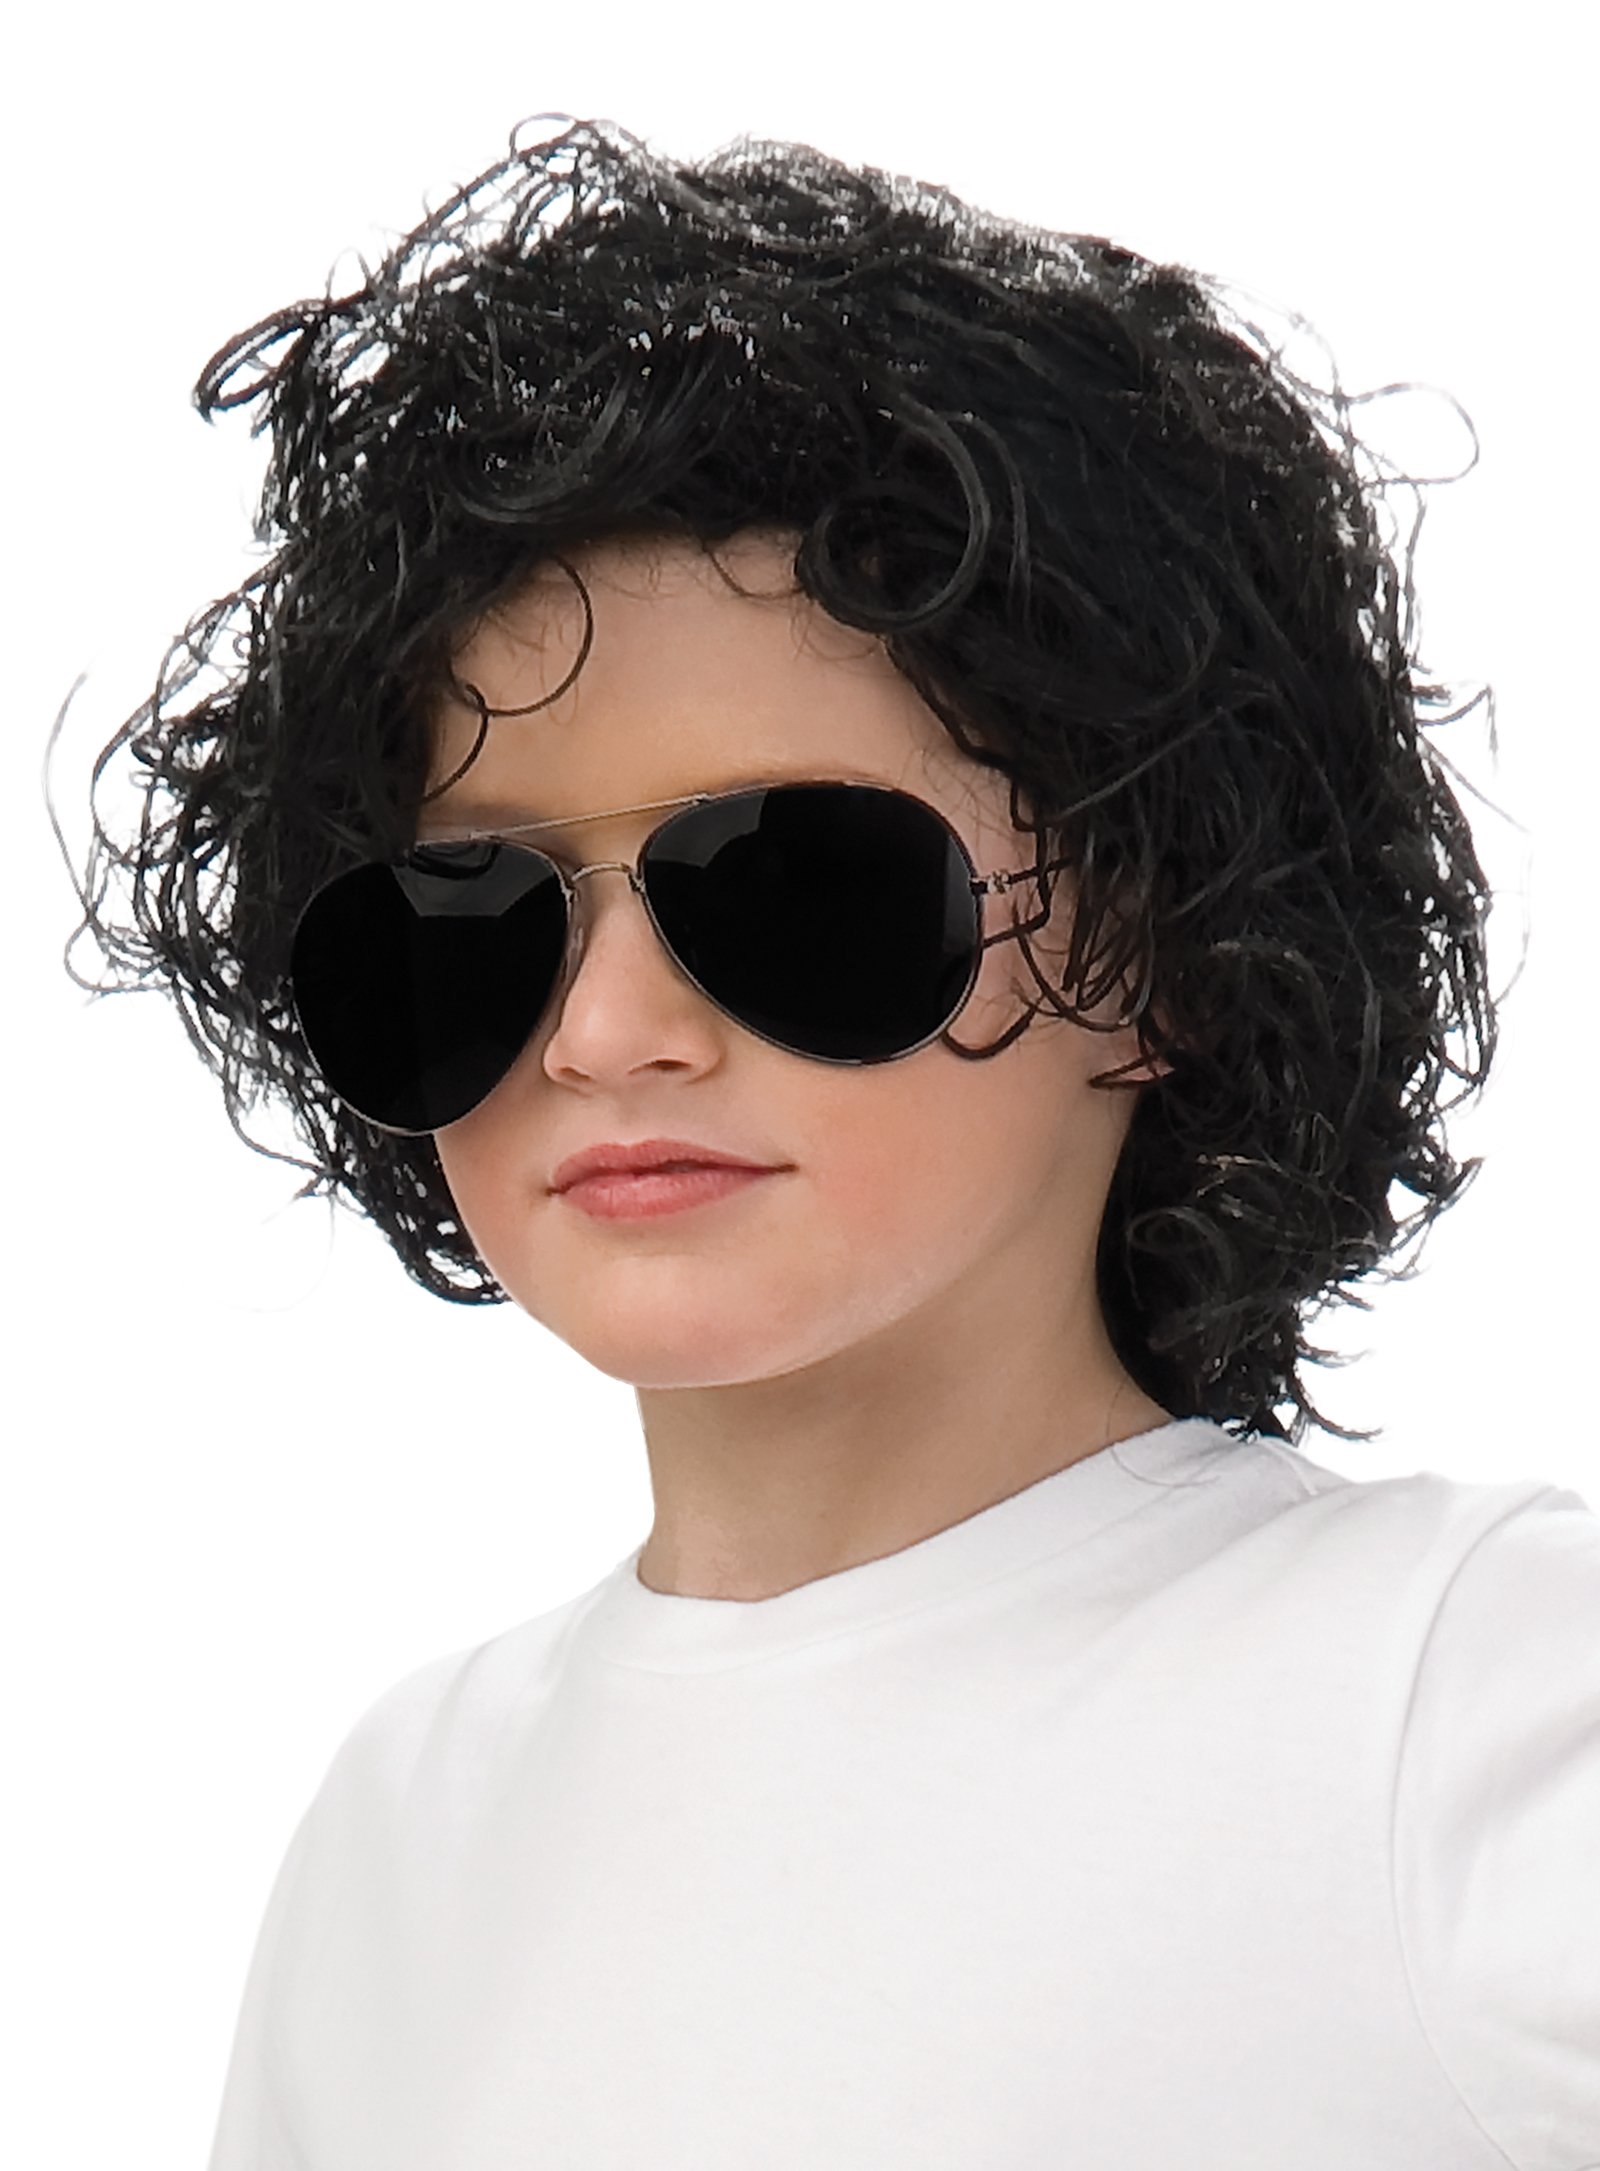 Michael Jackson Curly Wig (Child)